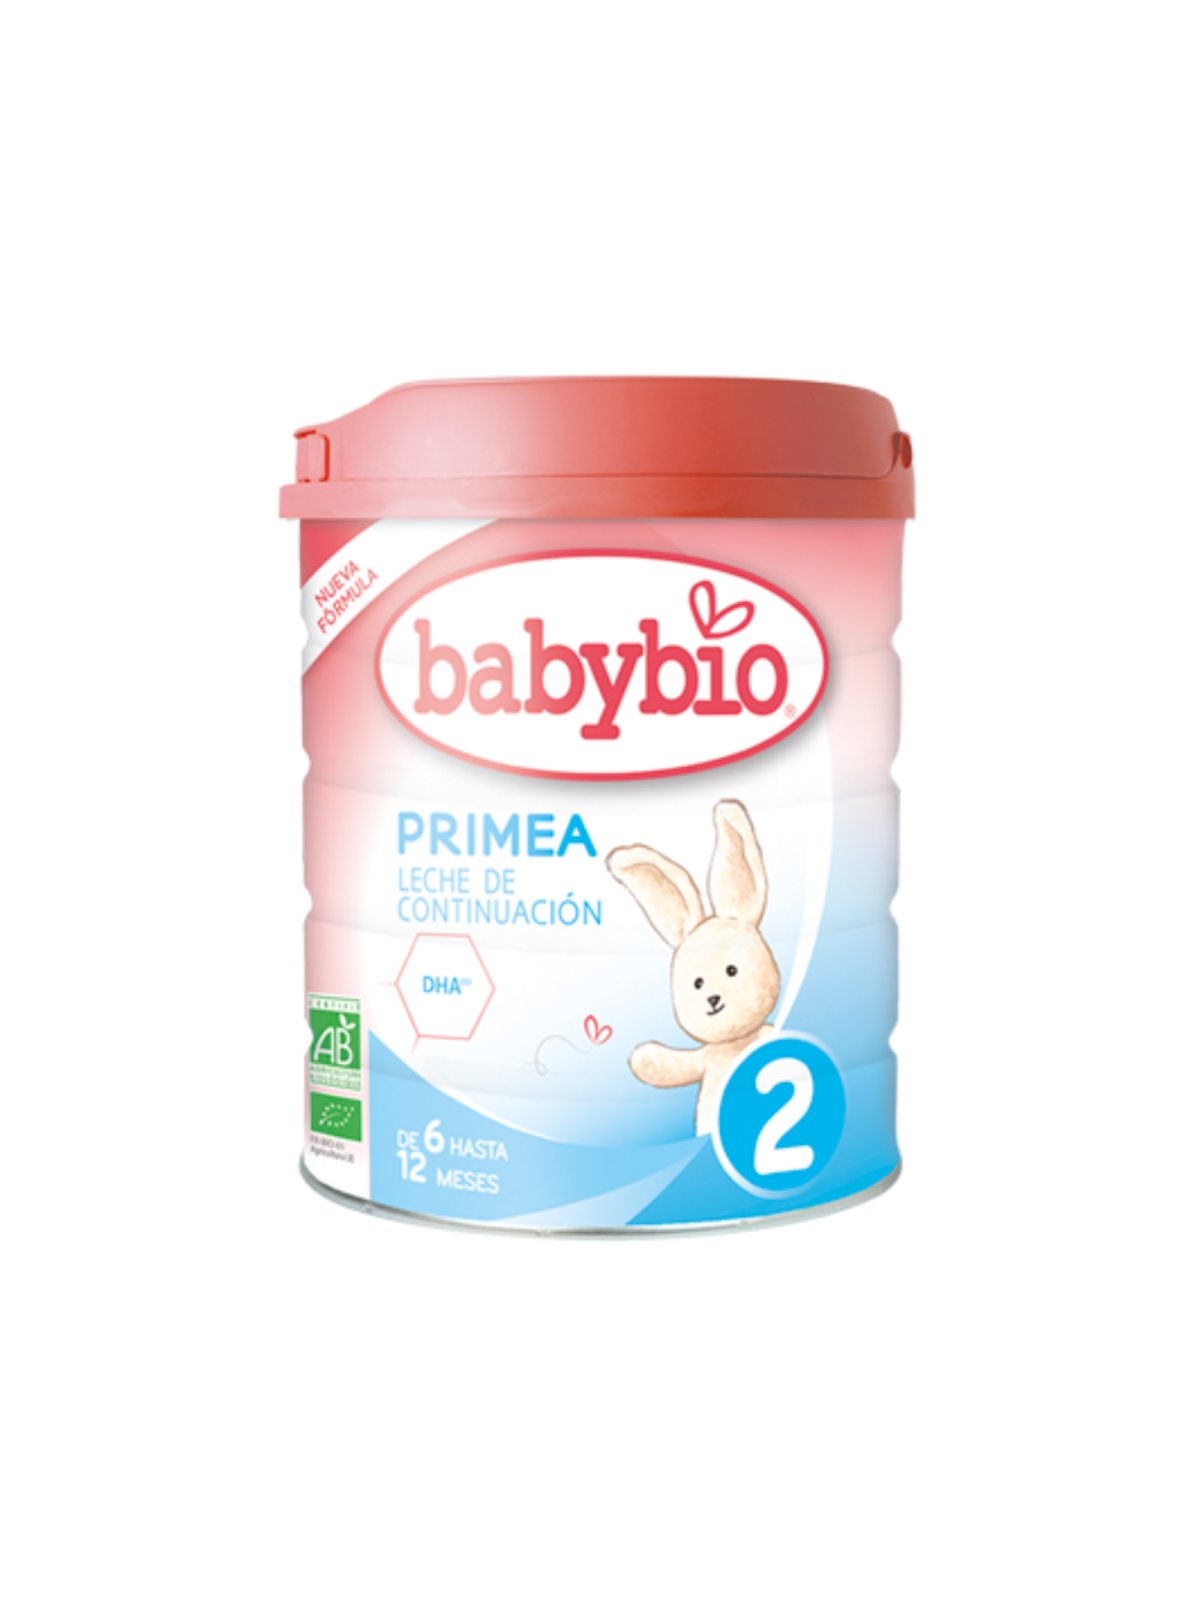 Babybio - Optima 1 from 0 to 6 Months Organic 800g